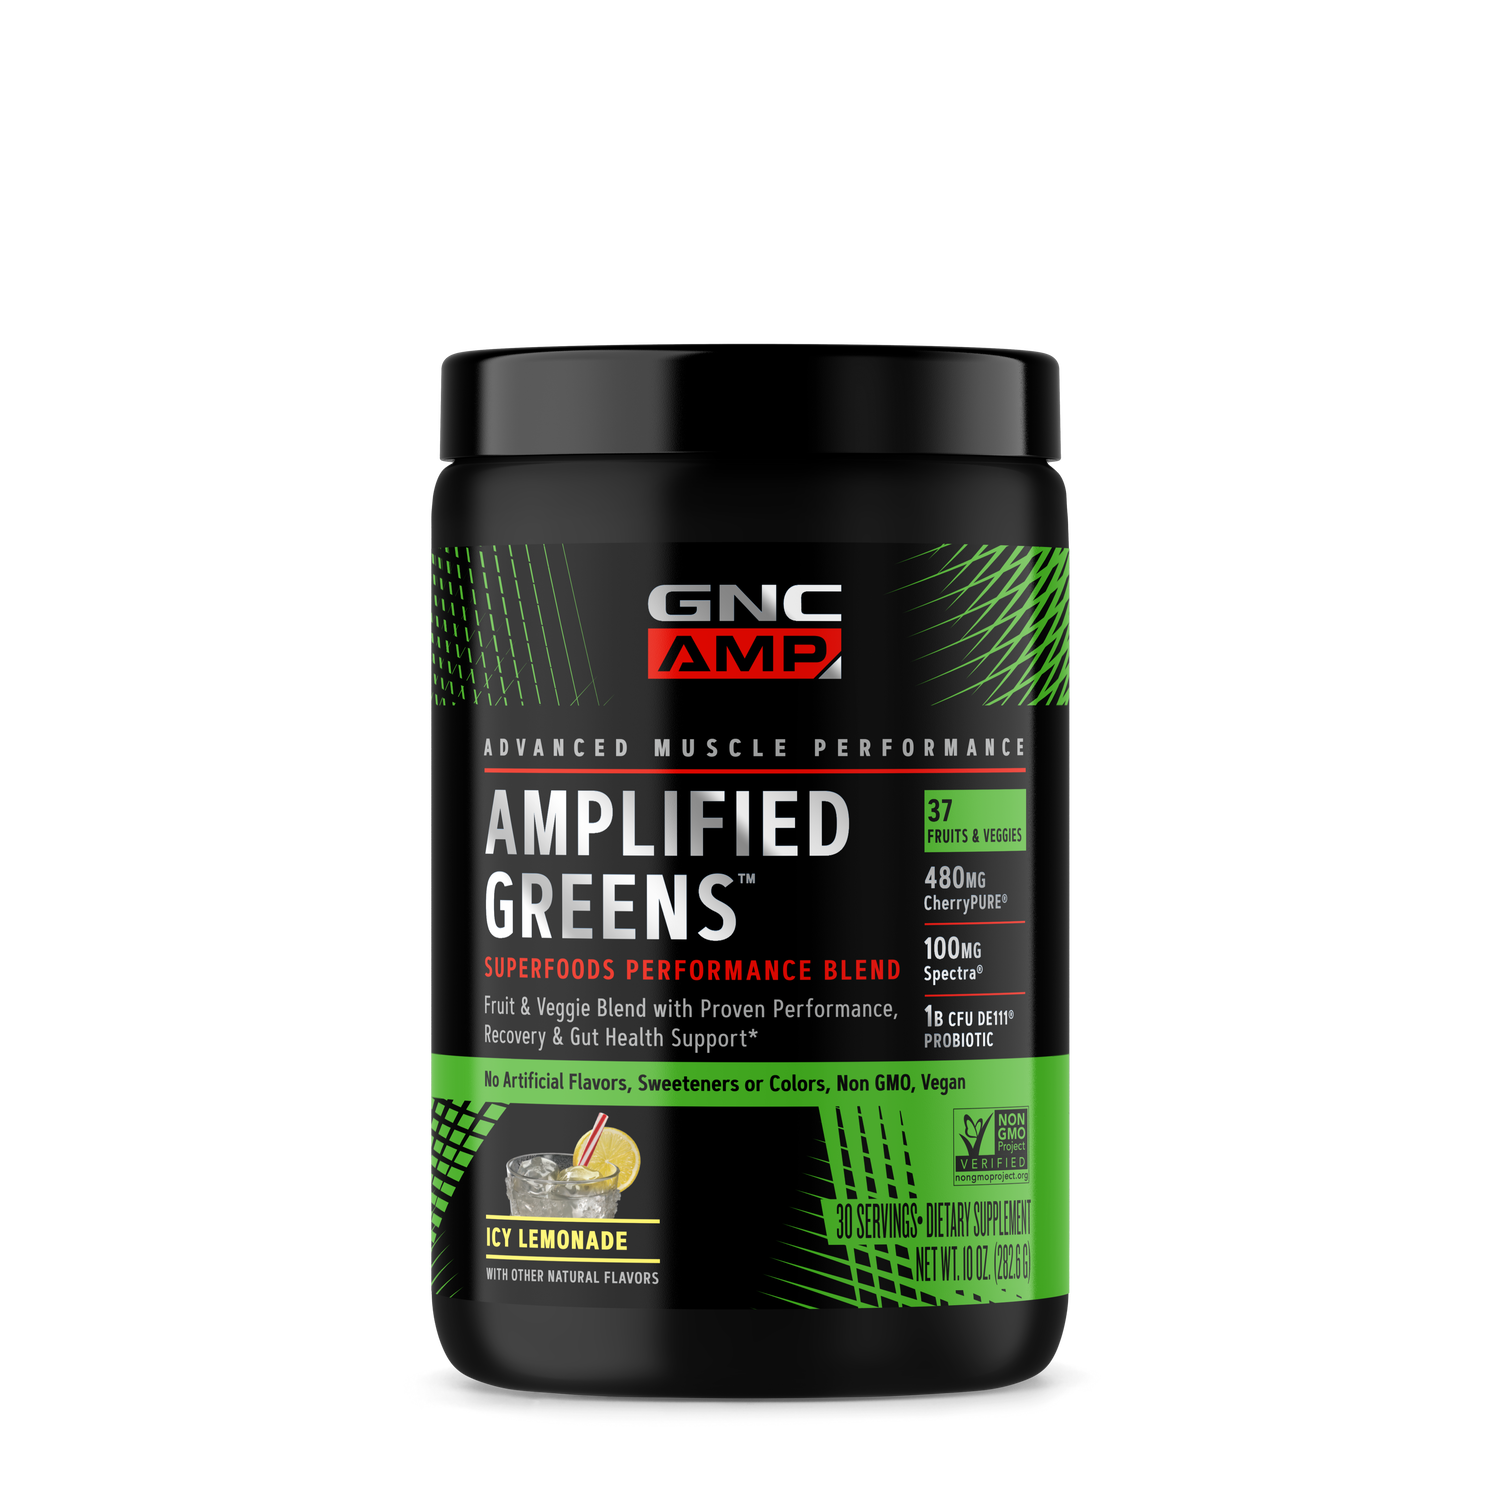 GNC AMP Amplified Greens Superfoods Blend Healthy - Icy Lemonade Healthy -10 Oz. (30 Servings)